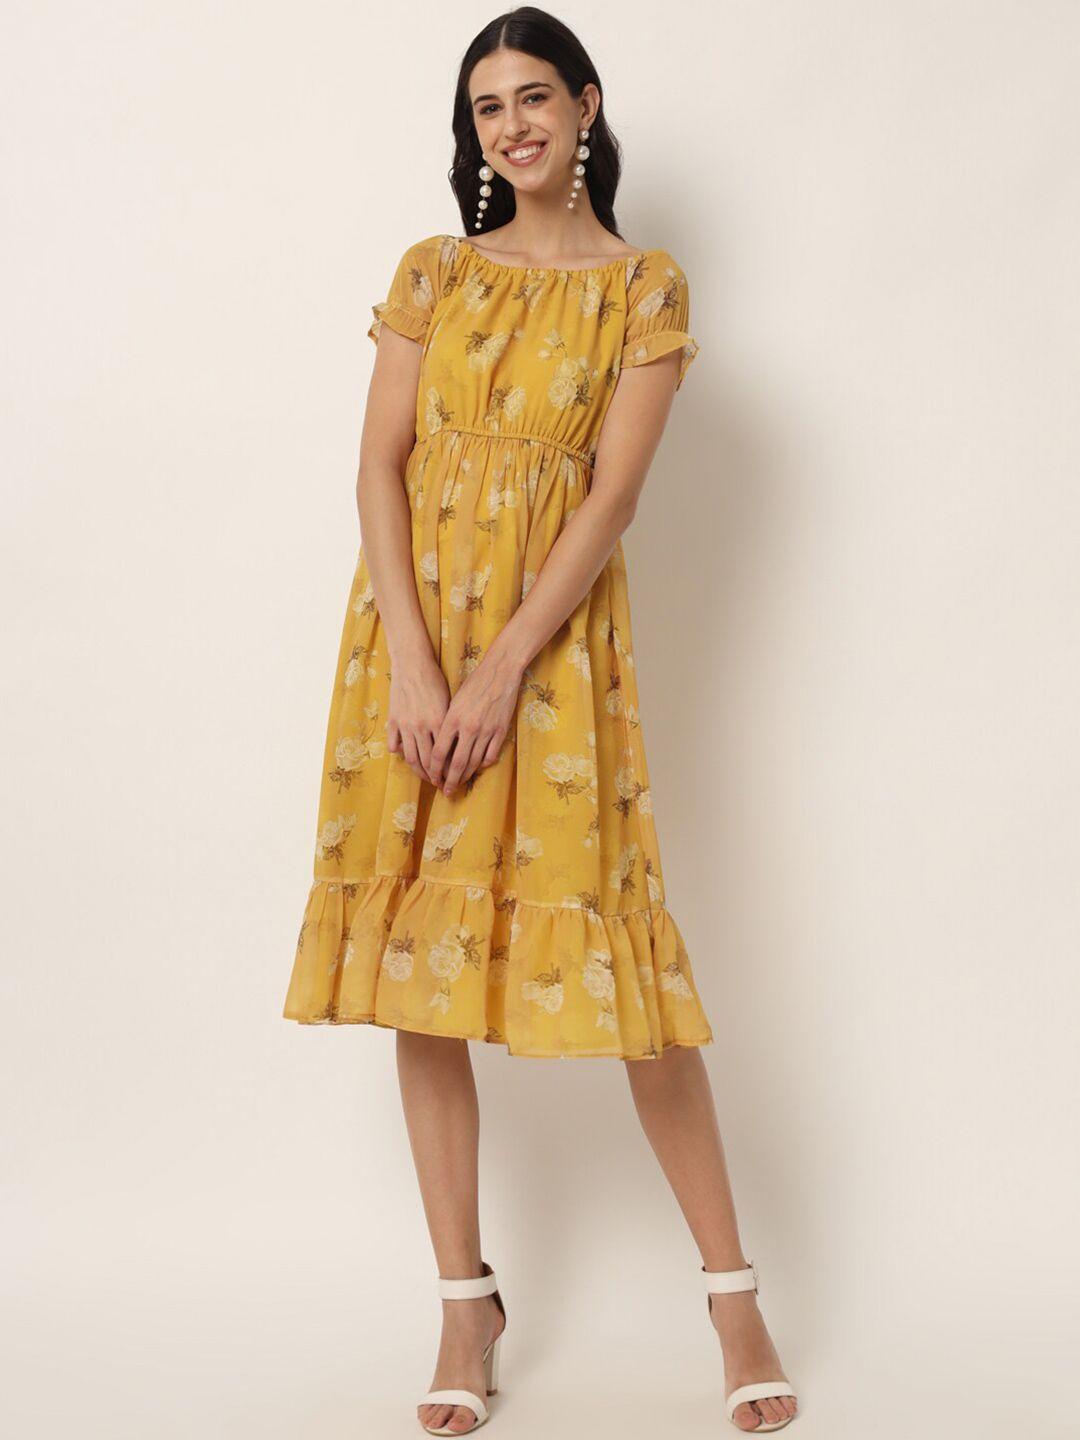 vairagee mustard yellow floral off-shoulder georgette midi dress